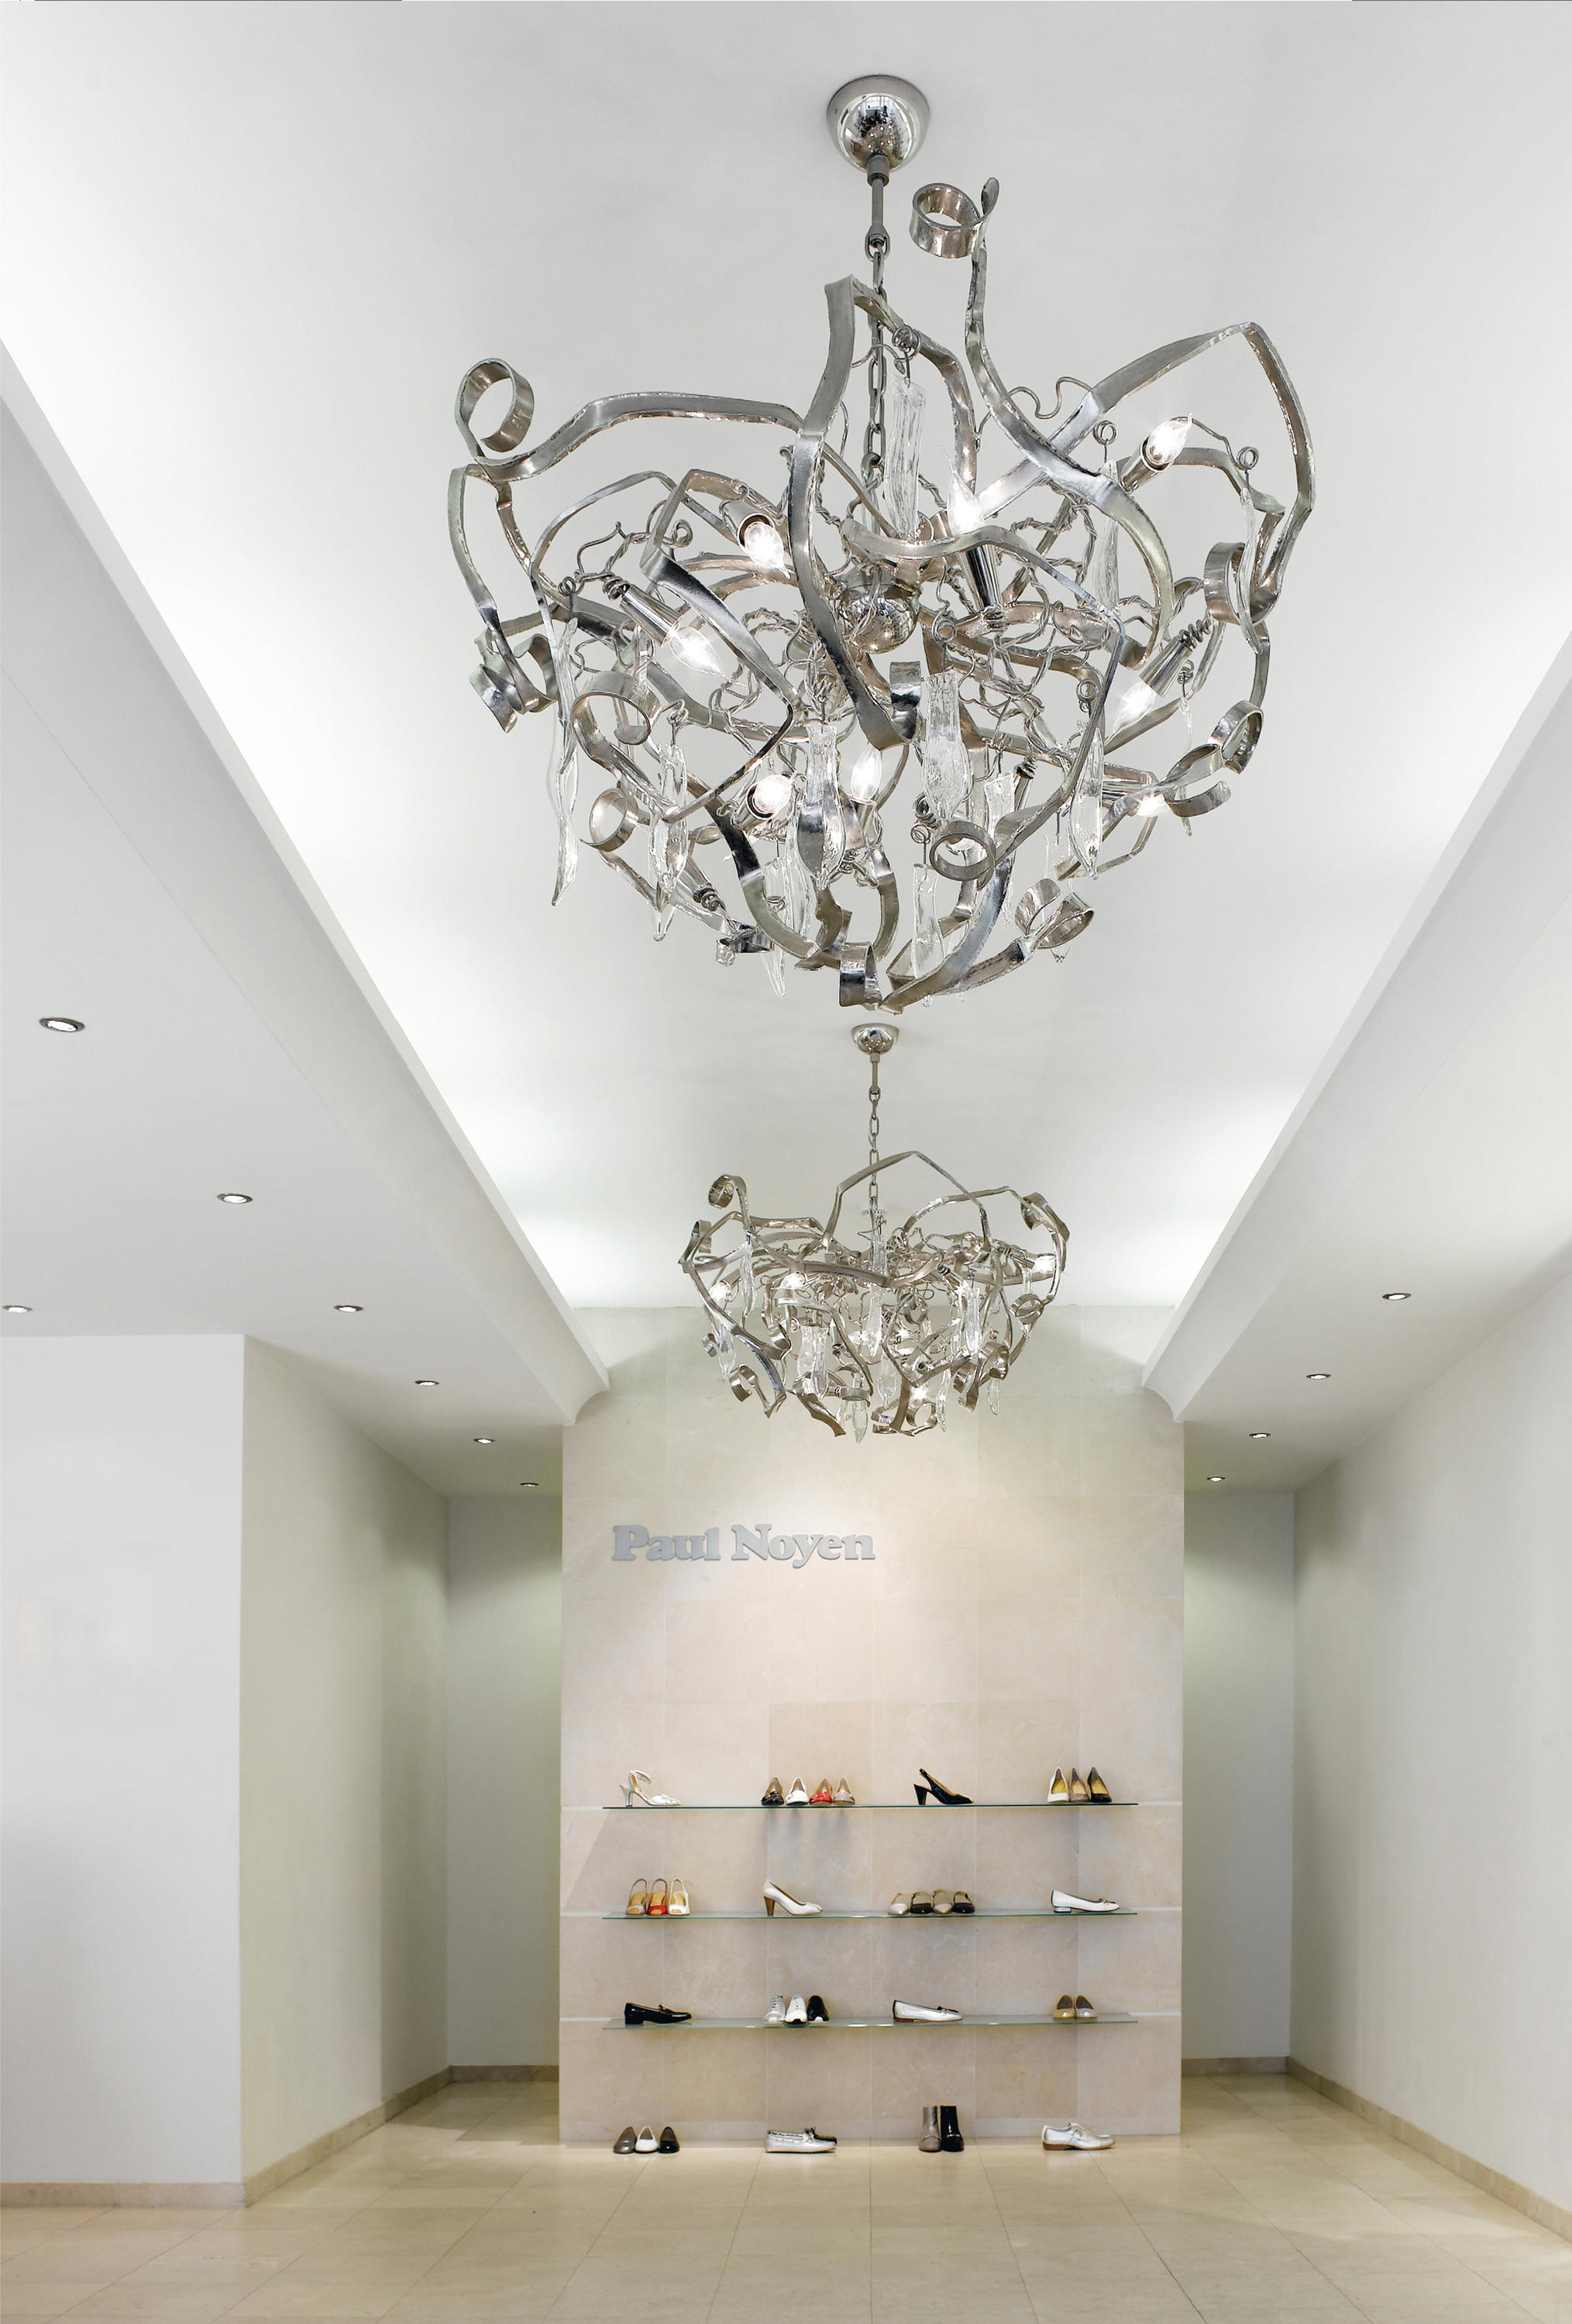 Louis Vuitton by Brand van Egmond